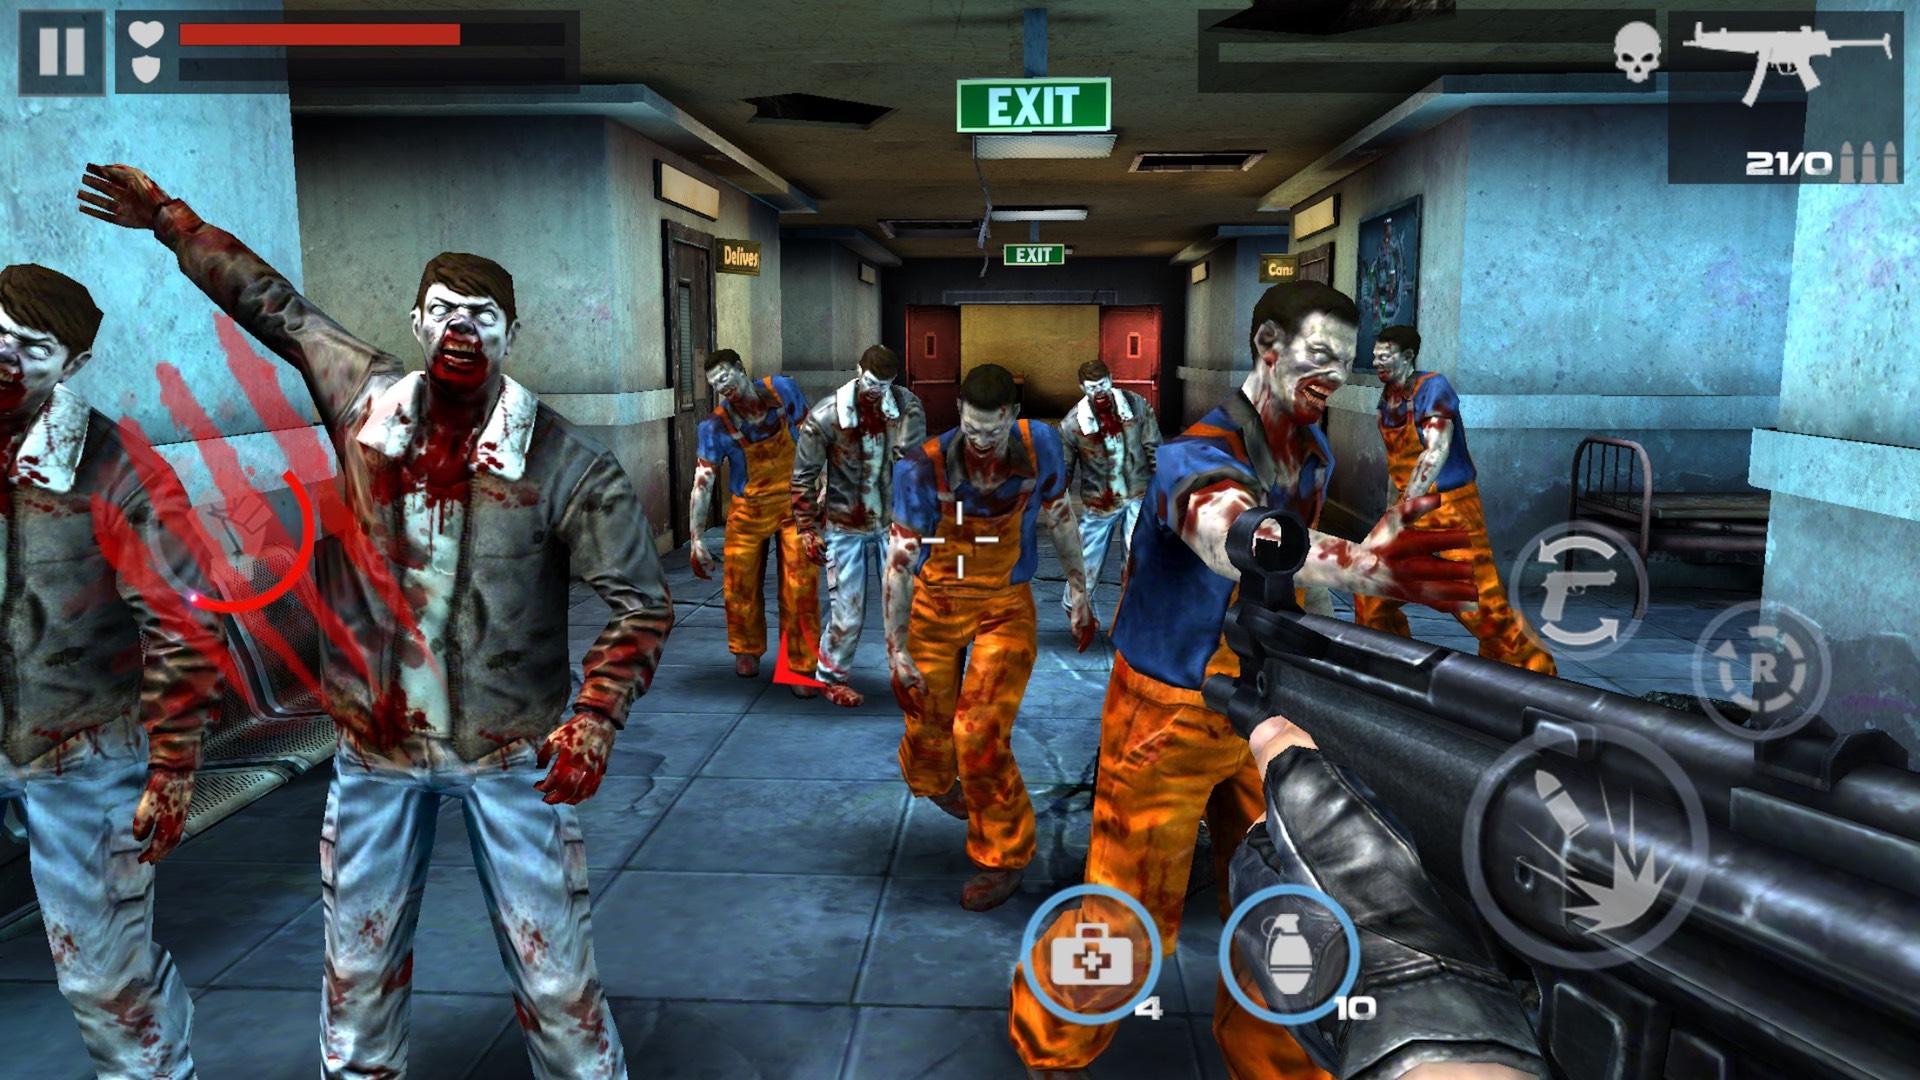 Juegos de Zombies: DEAD TARGET for Android - APK Download